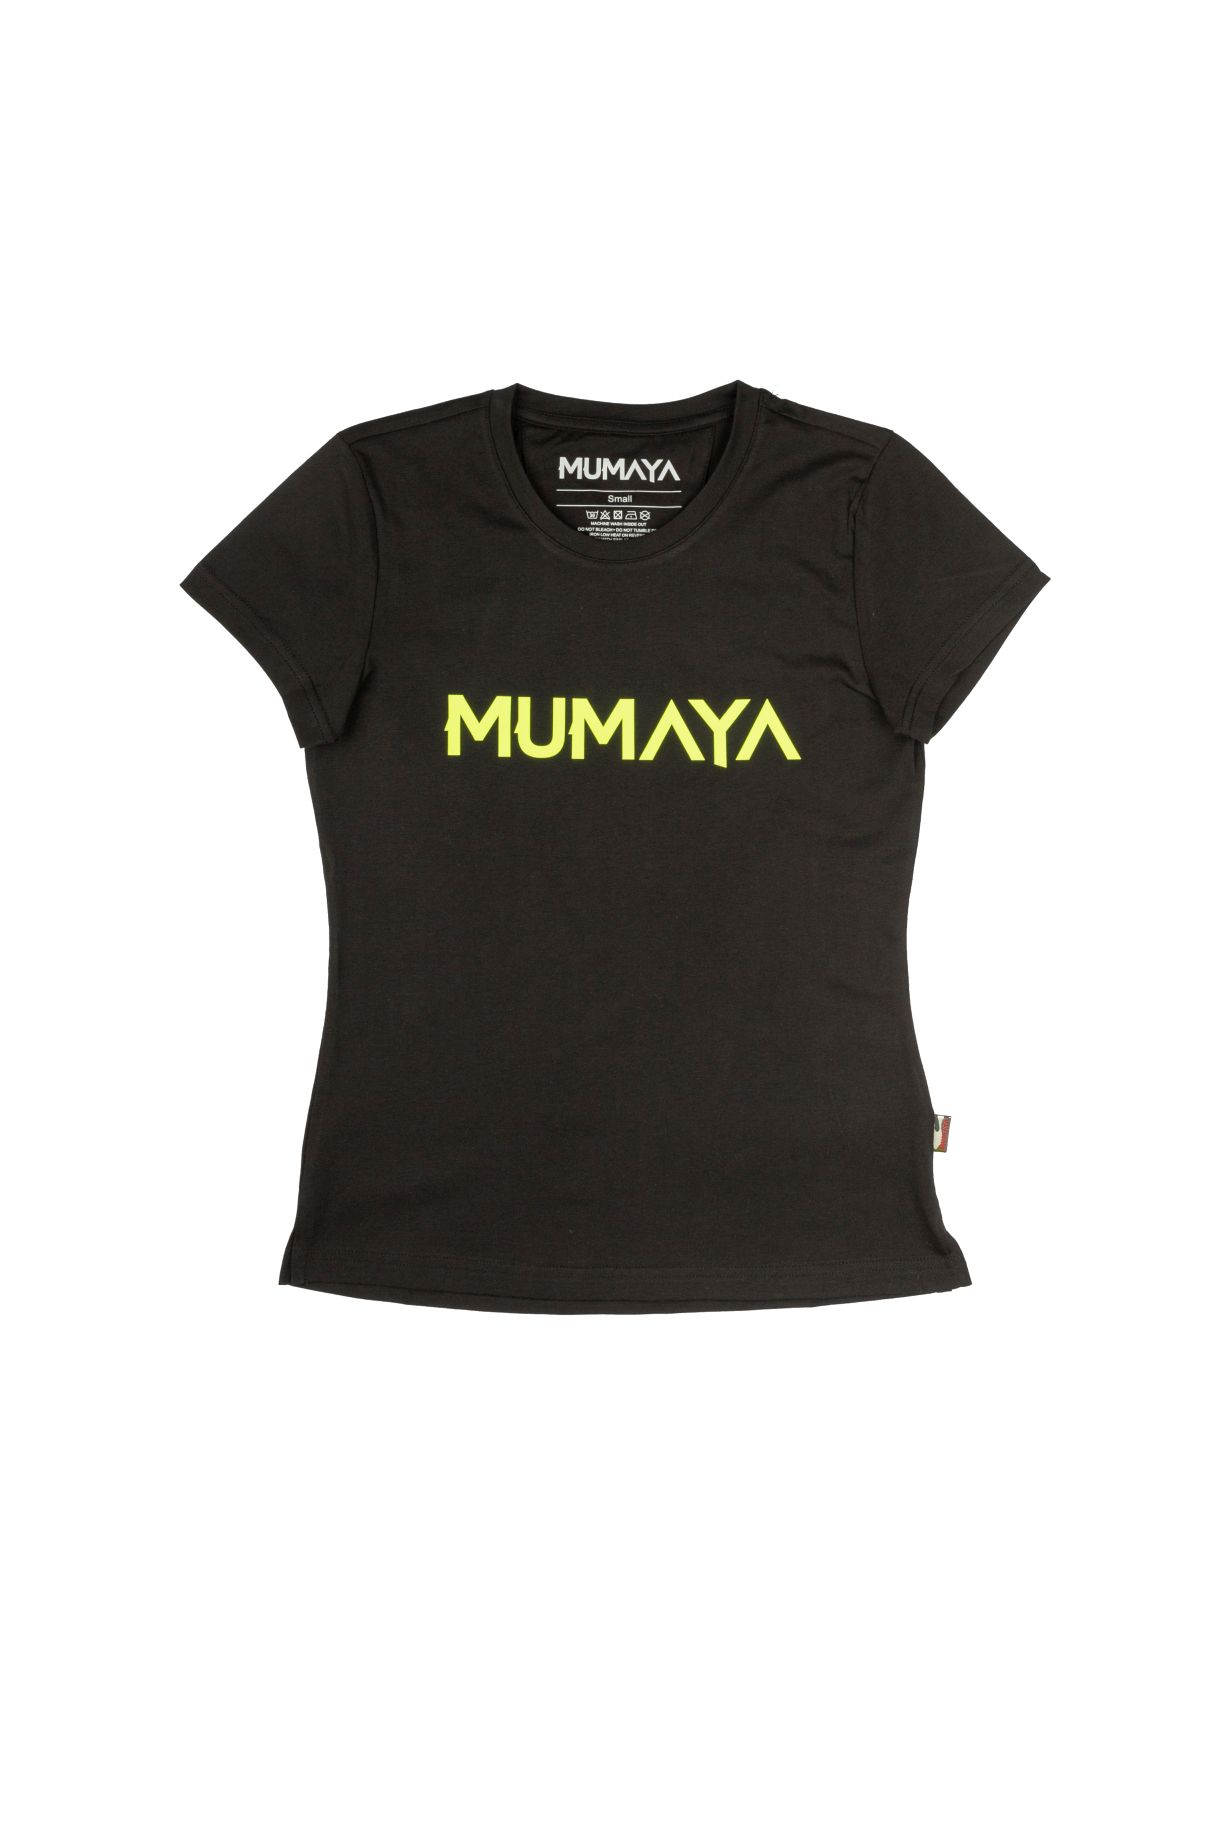 Mumaya BaselineShirt Lady Black